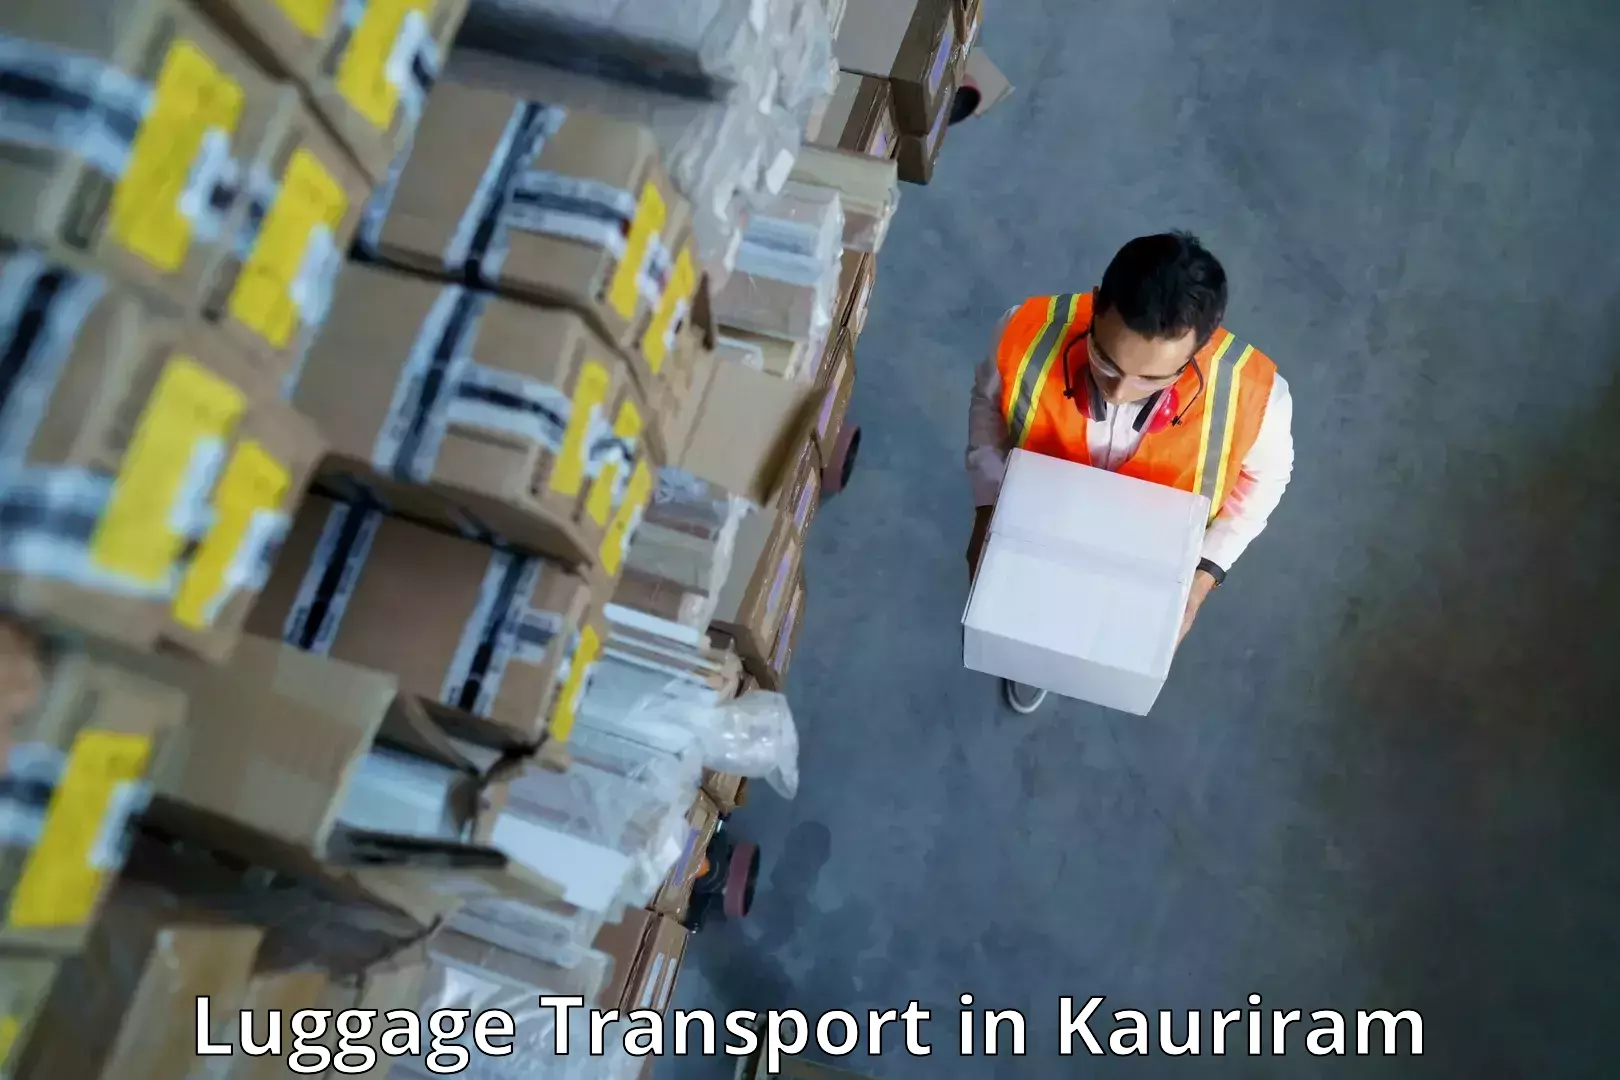 Luggage transport rates in Kauriram